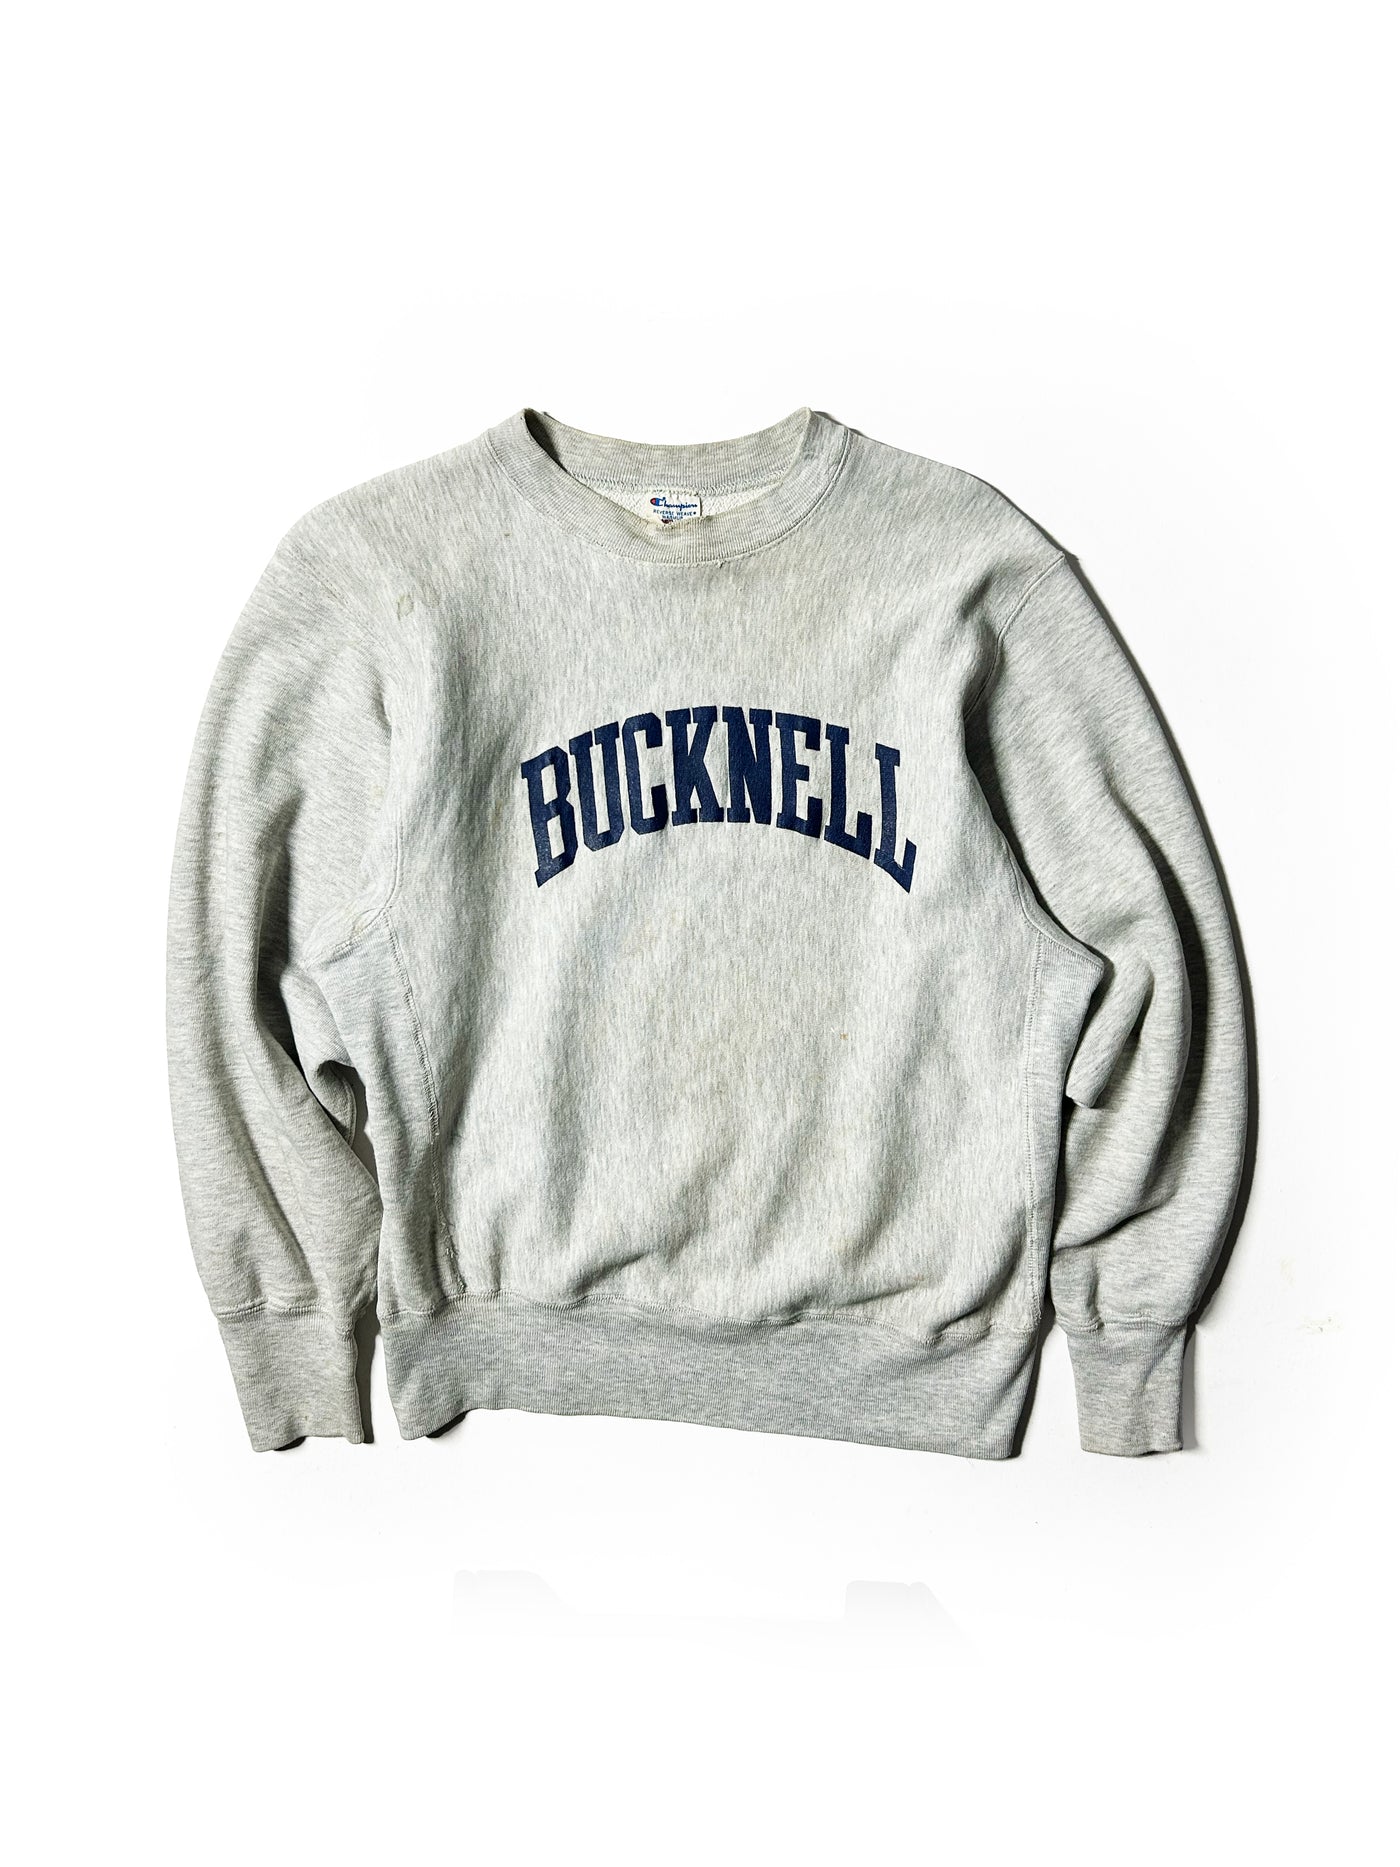 Vintage 80s Champion Reverse Weave Bucknell Crewneck